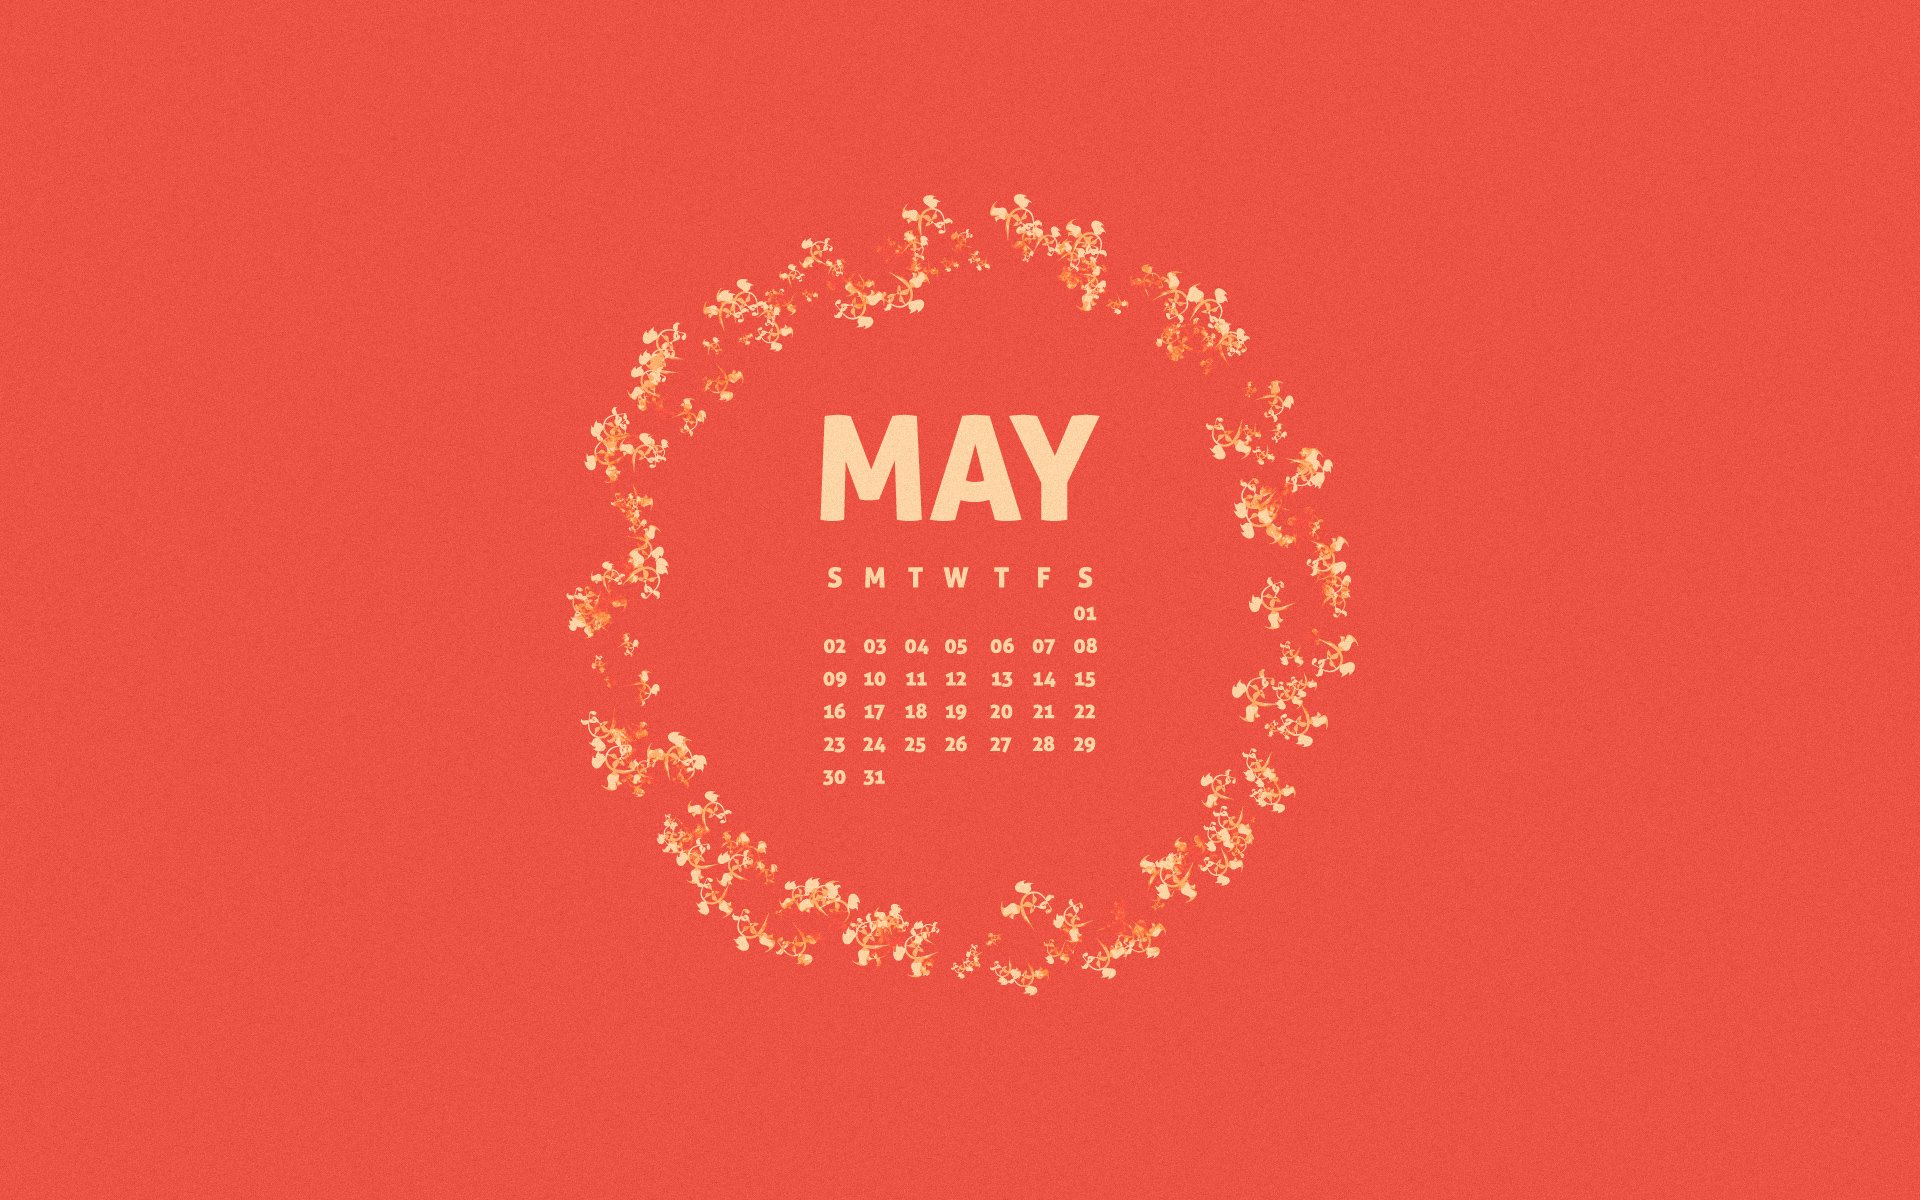 Click to download the May 2010 Desktop Calendar Wallpaper in 1920X1200